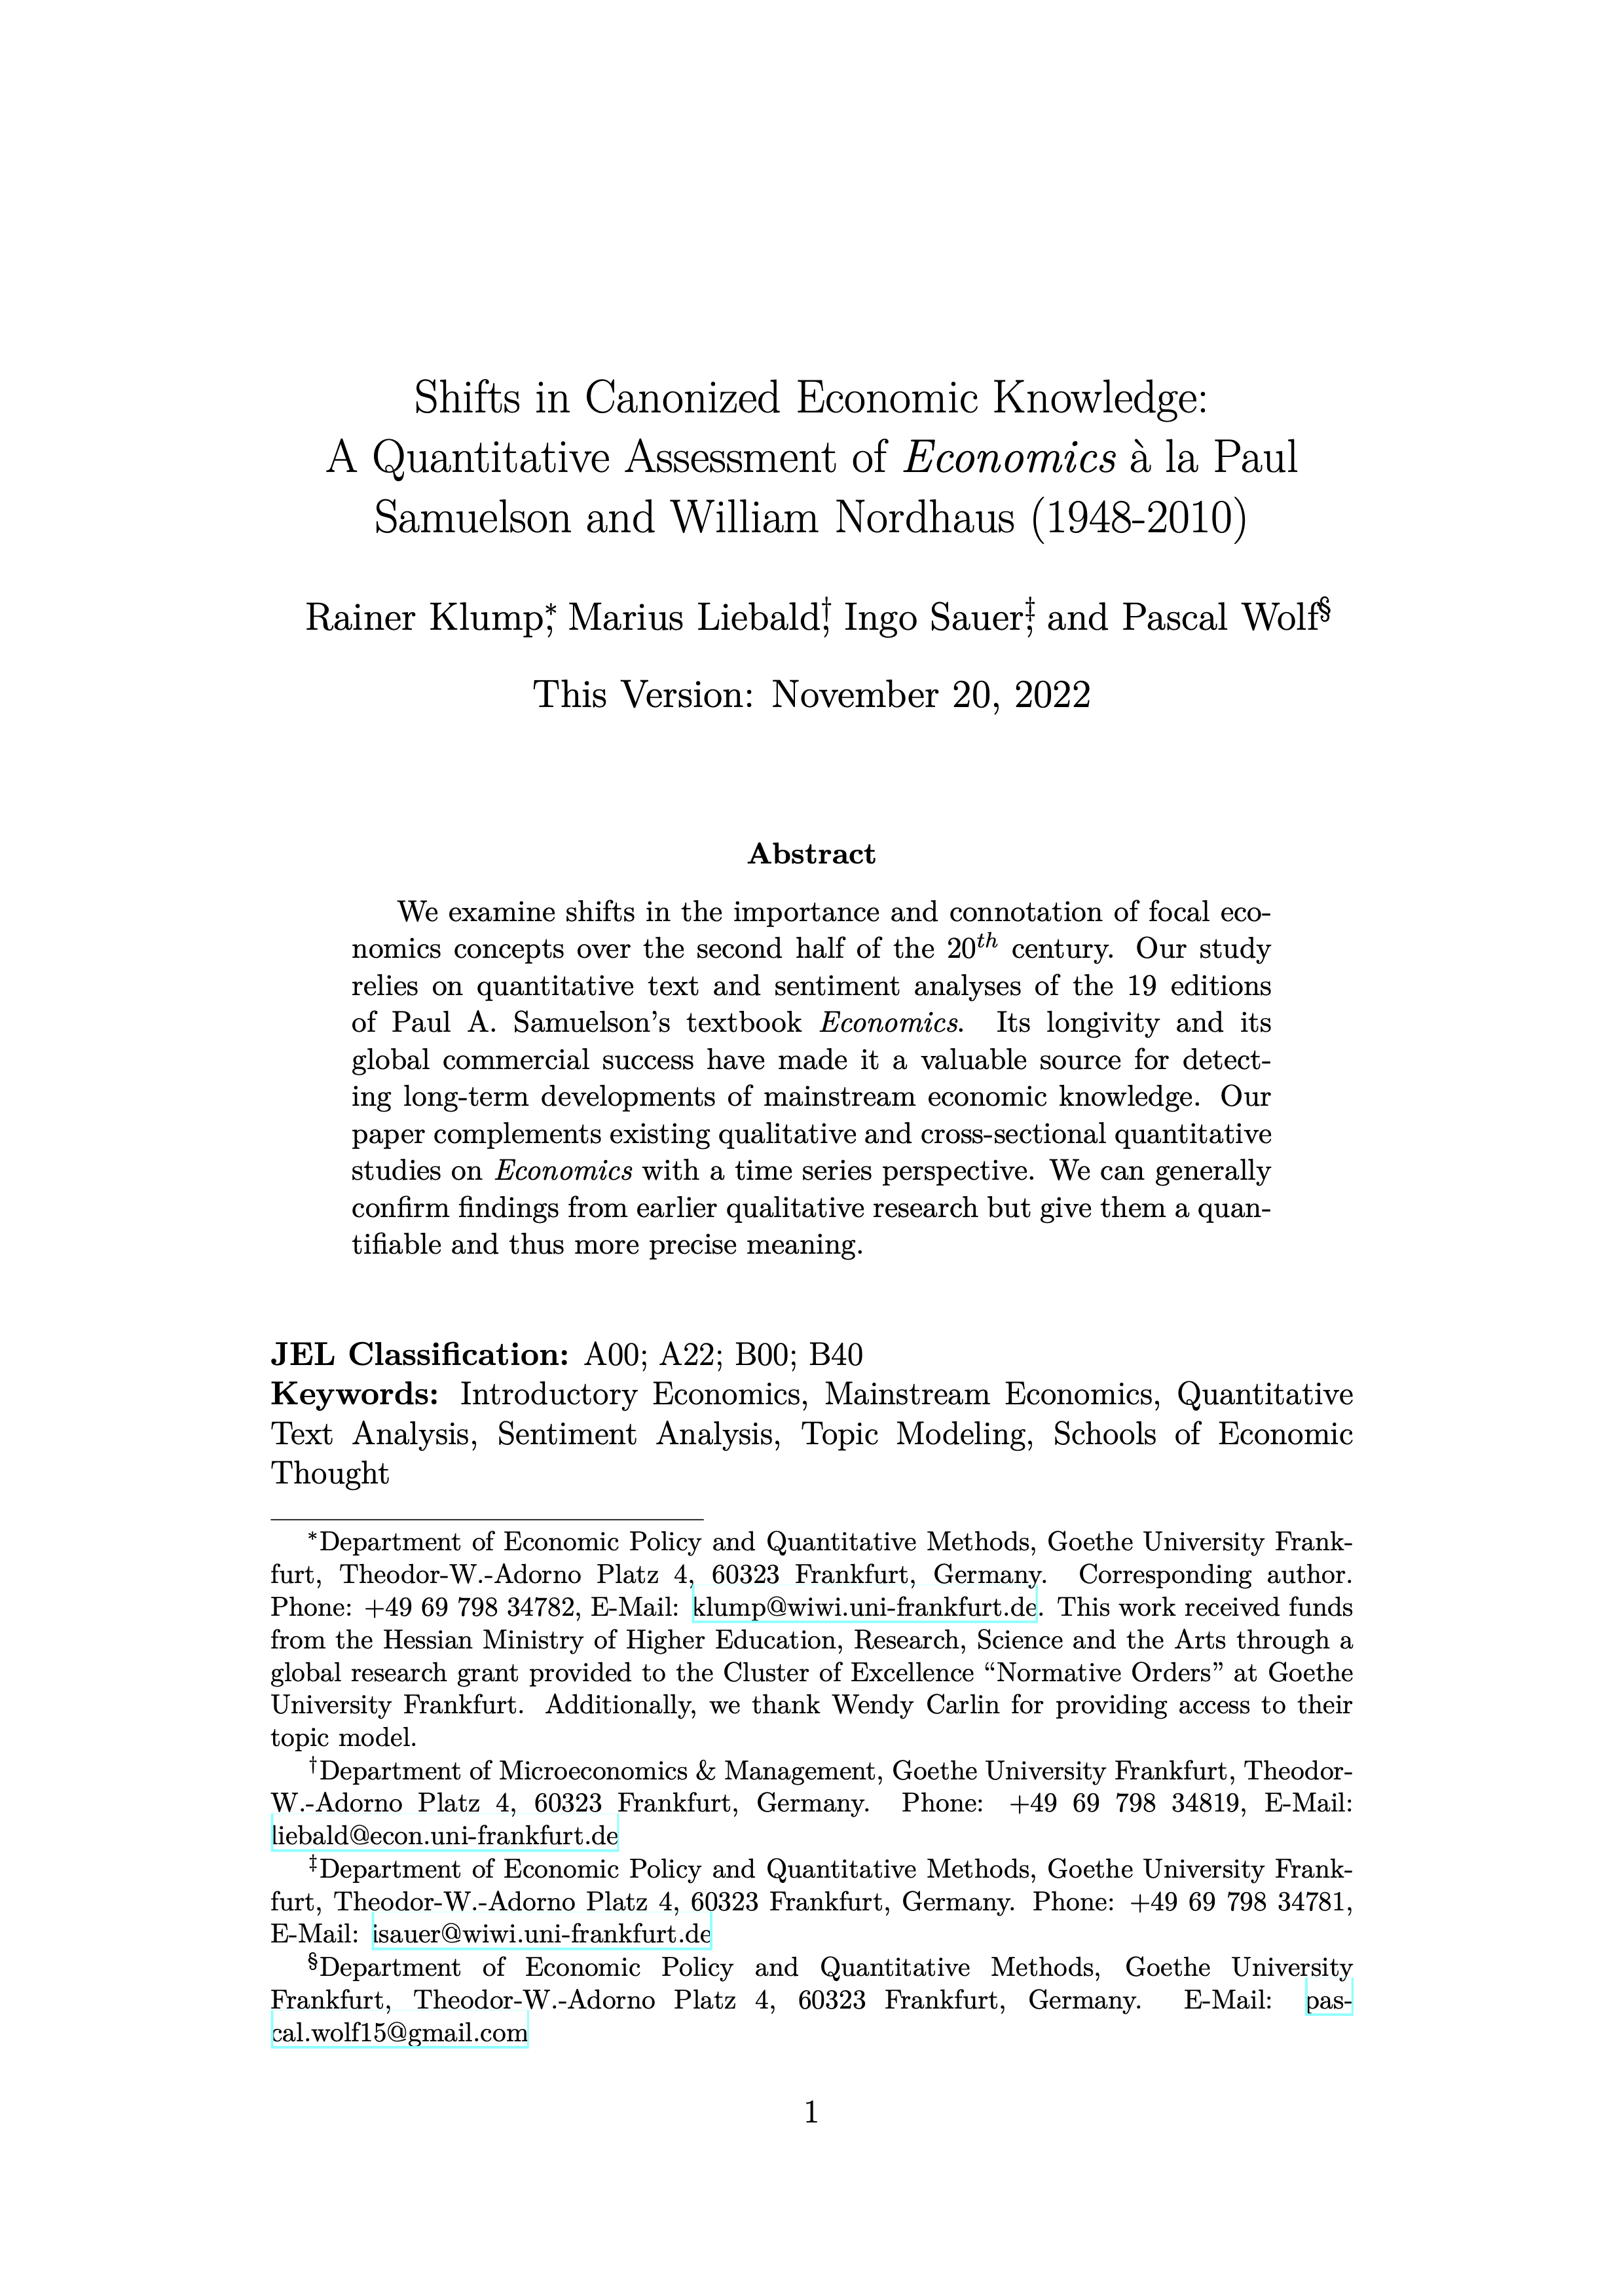 Paper: Shifts in Canonized Economic Knowledge: A Quantitative Assessment of Economics à la Paul Samuelson and William Nordhaus (1948-2010)